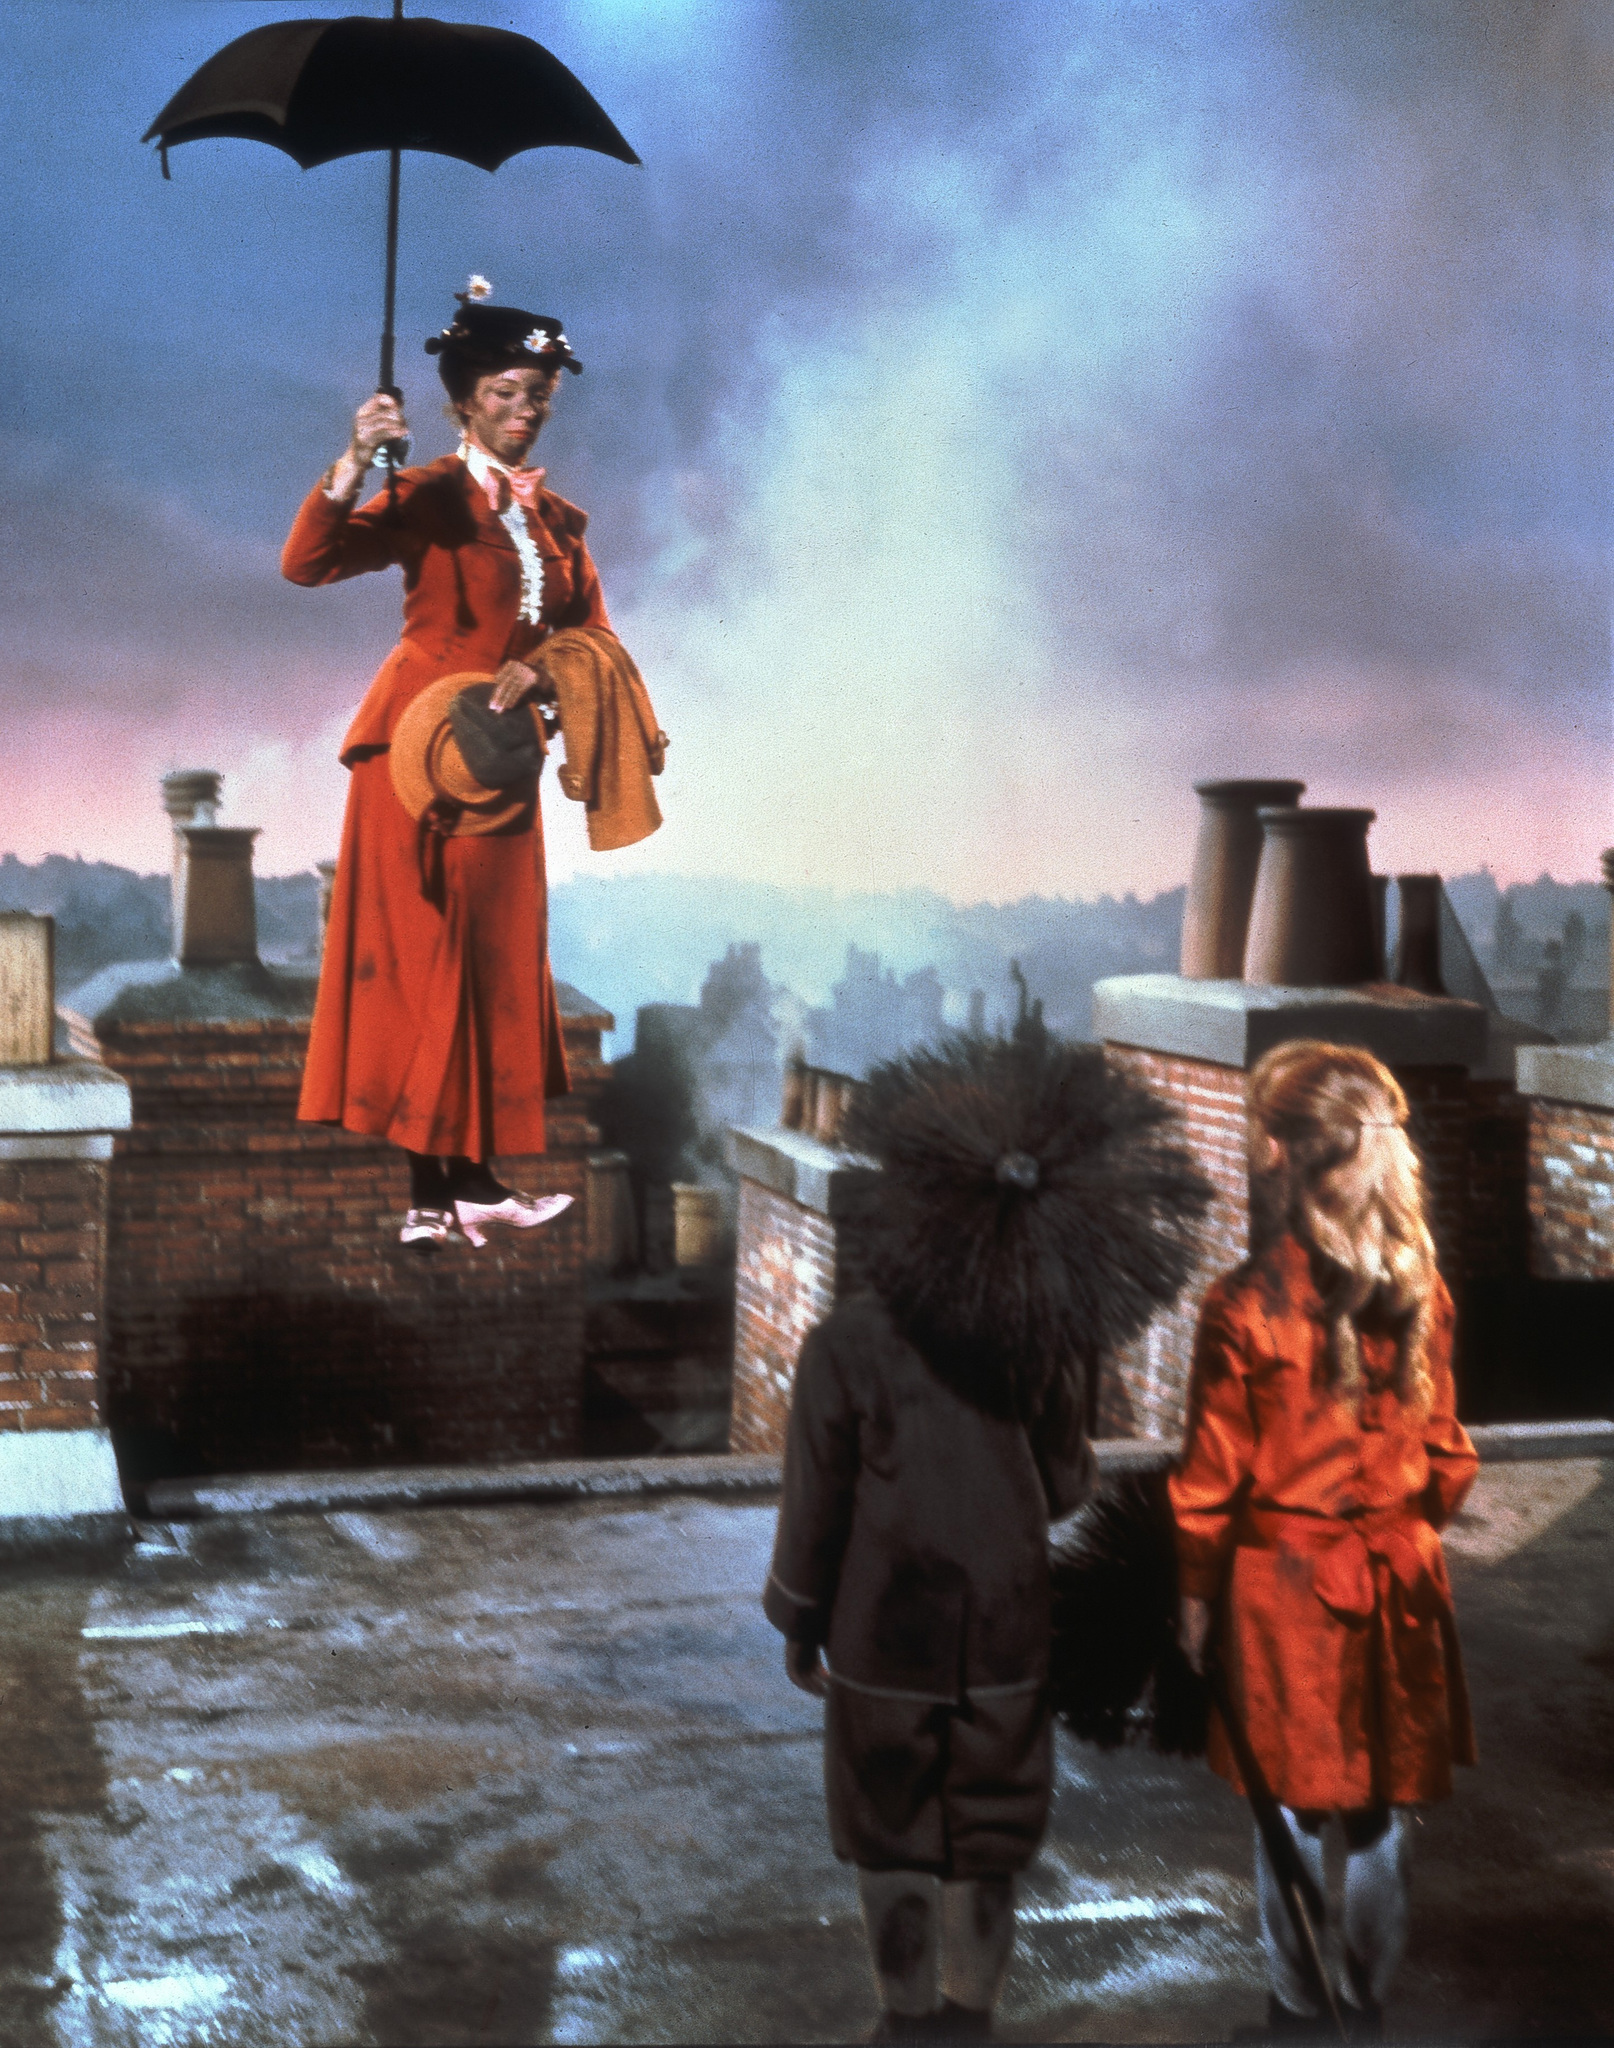 Still of Julie Andrews, Dick Van Dyke, Karen Dotrice and Matthew Garber in Mary Poppins (1964)